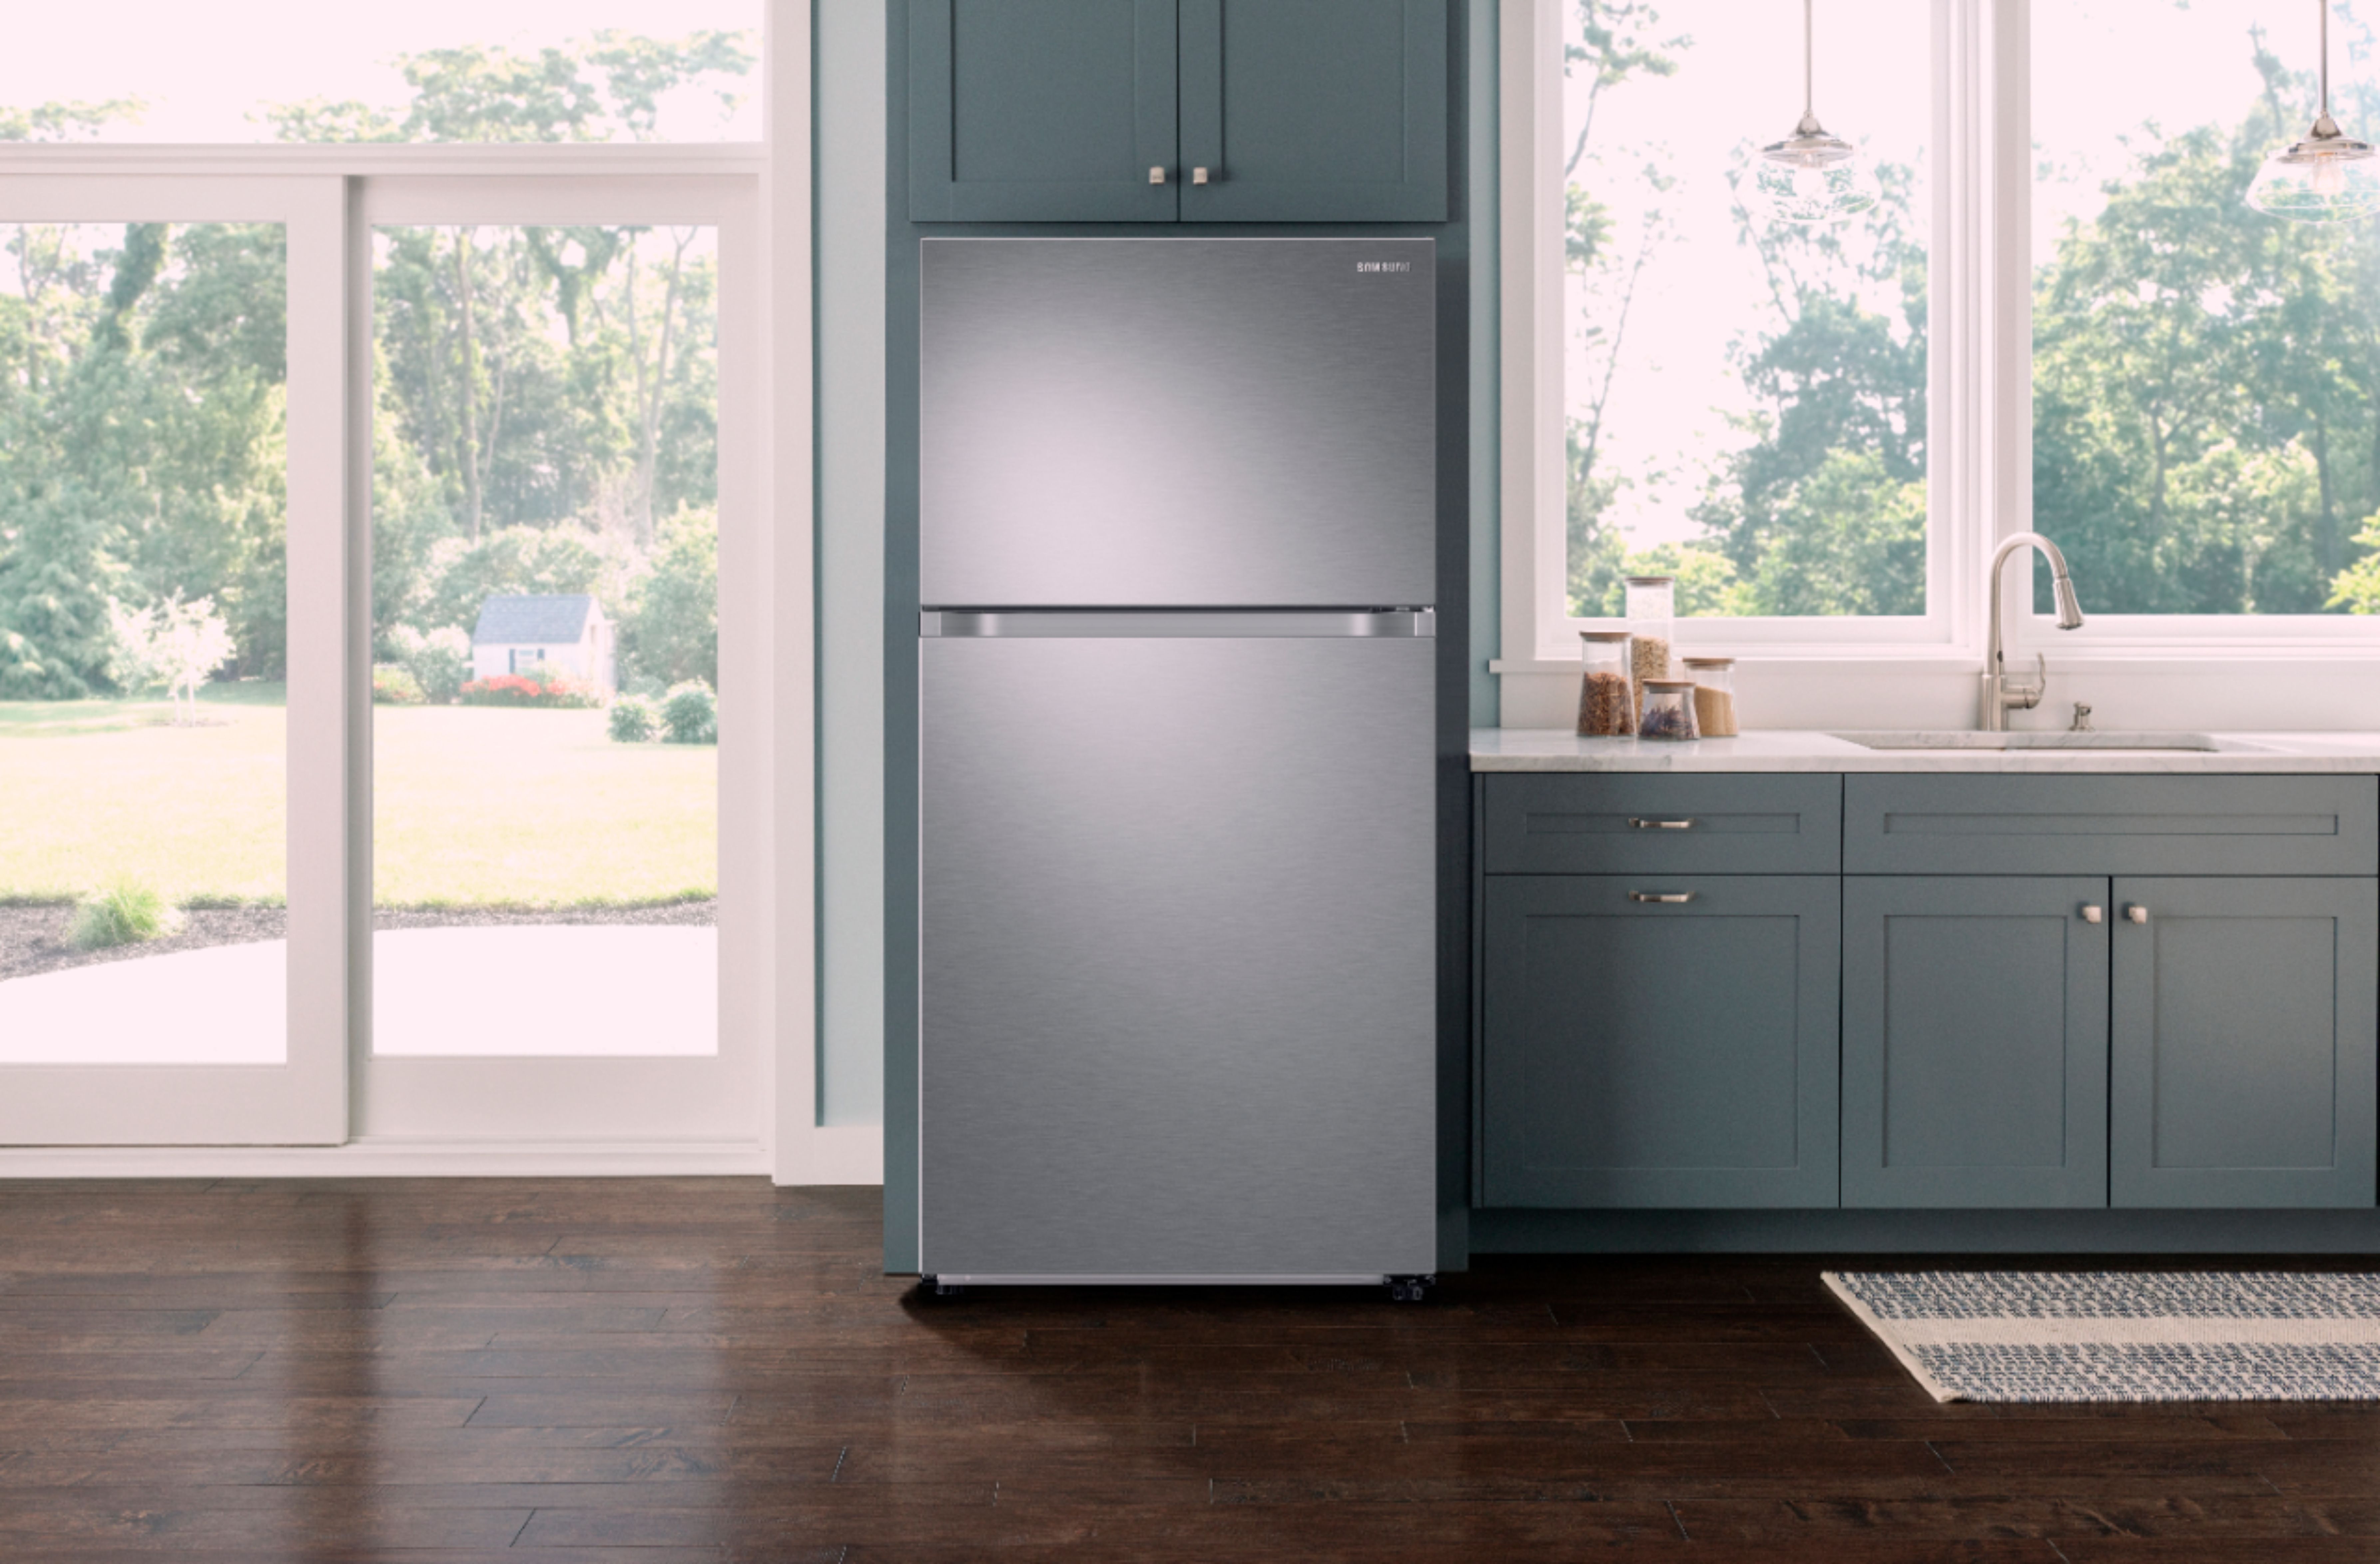 Samsung 17.6 cu. ft. Top-Freezer Refrigerator with FlexZone Stainless Steel  RT18M6215SR - Best Buy